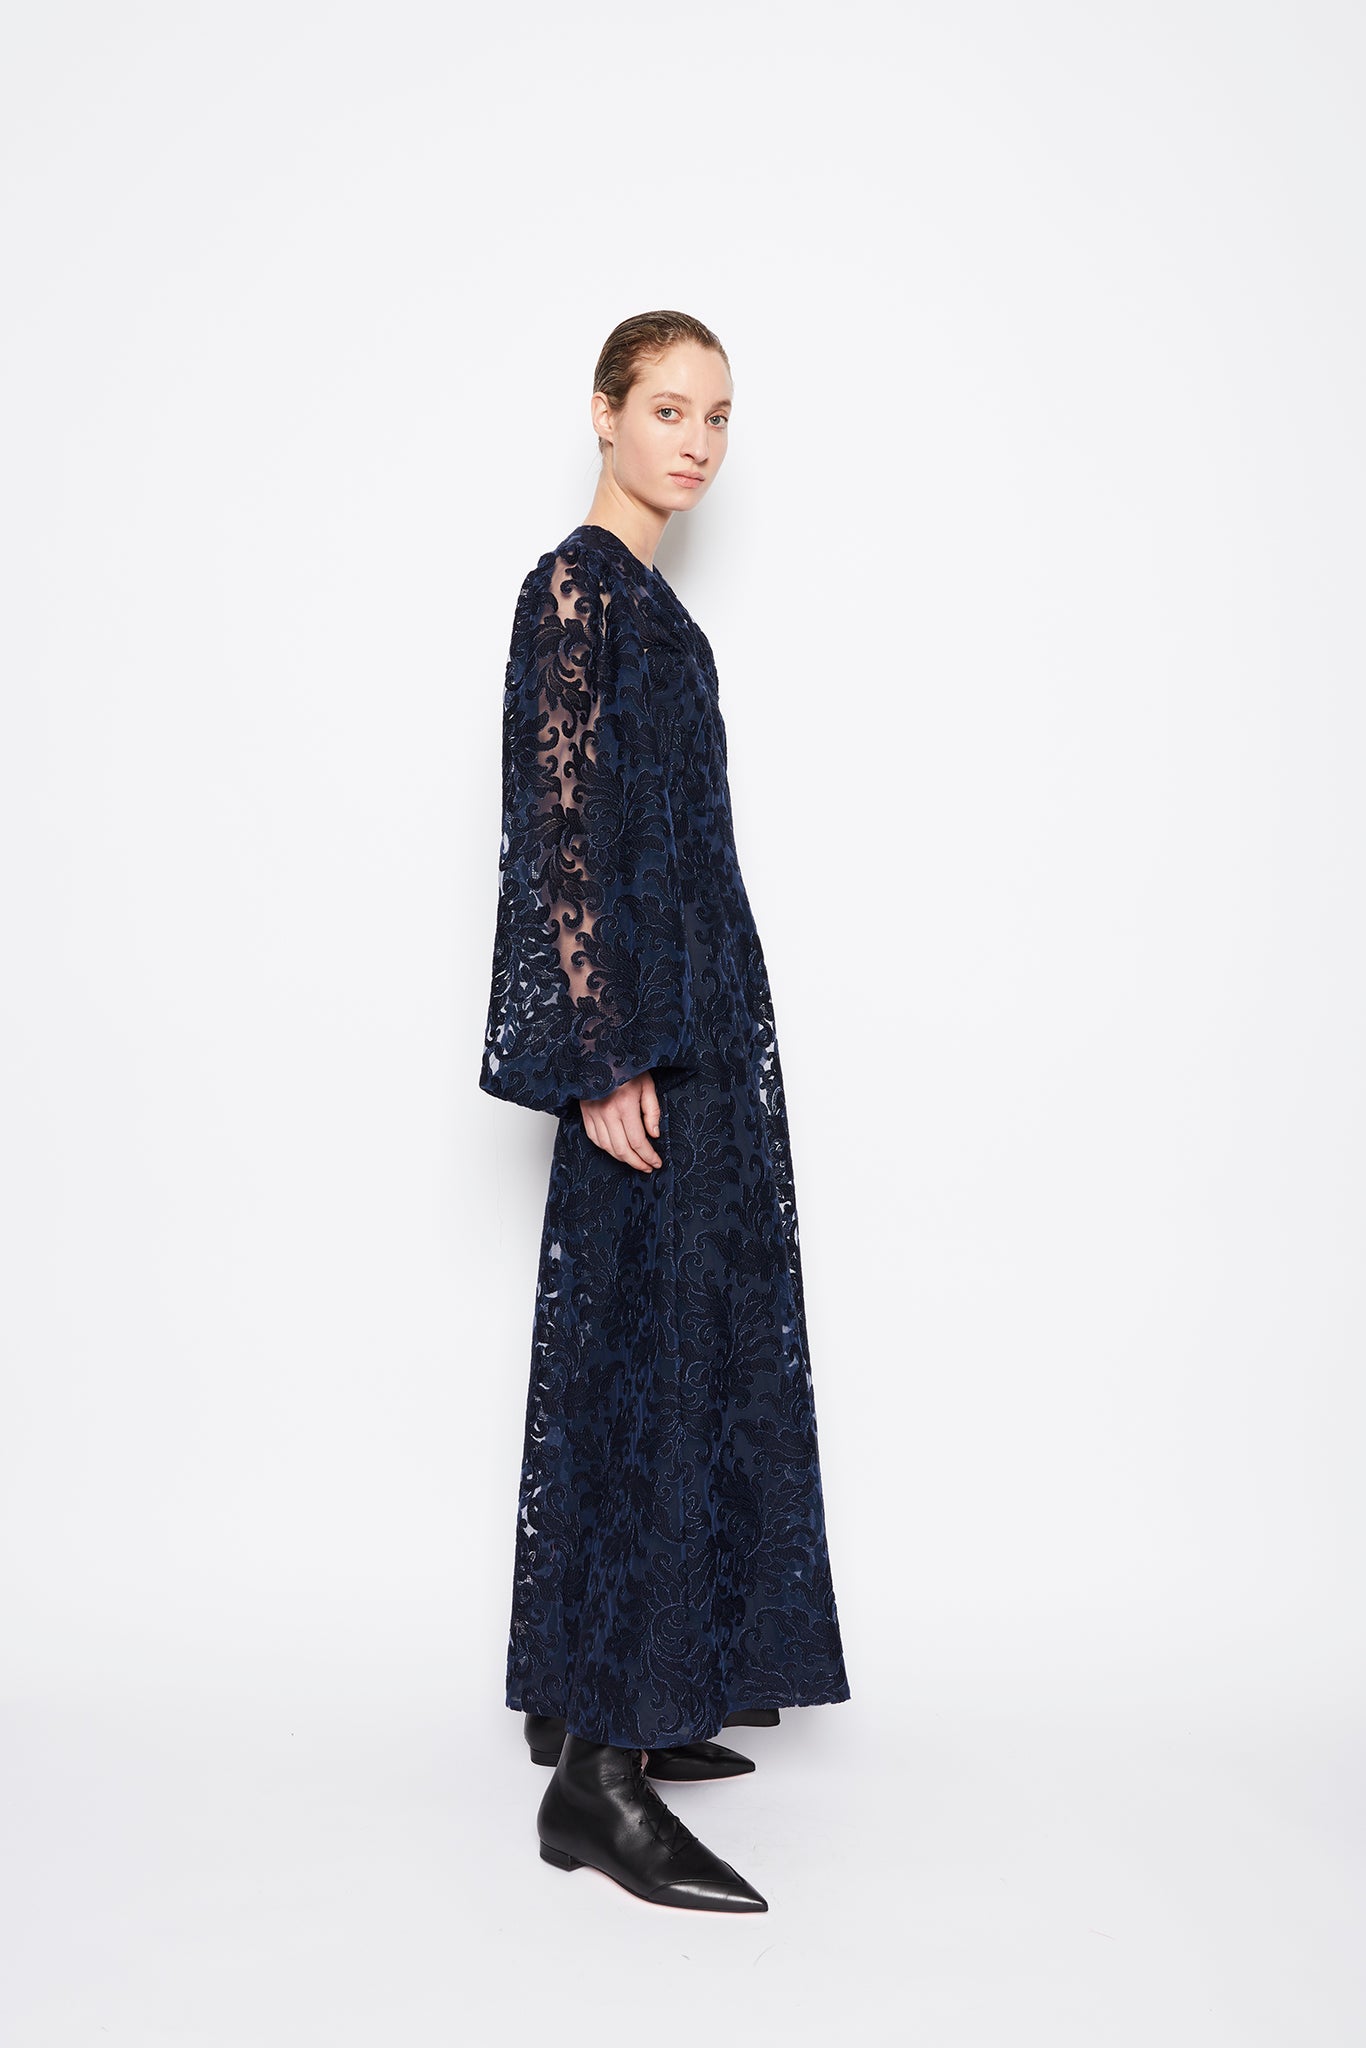 Carmelita Dress | Navy Blue Long Sleeve Lace Gown | Emilia Wickstead